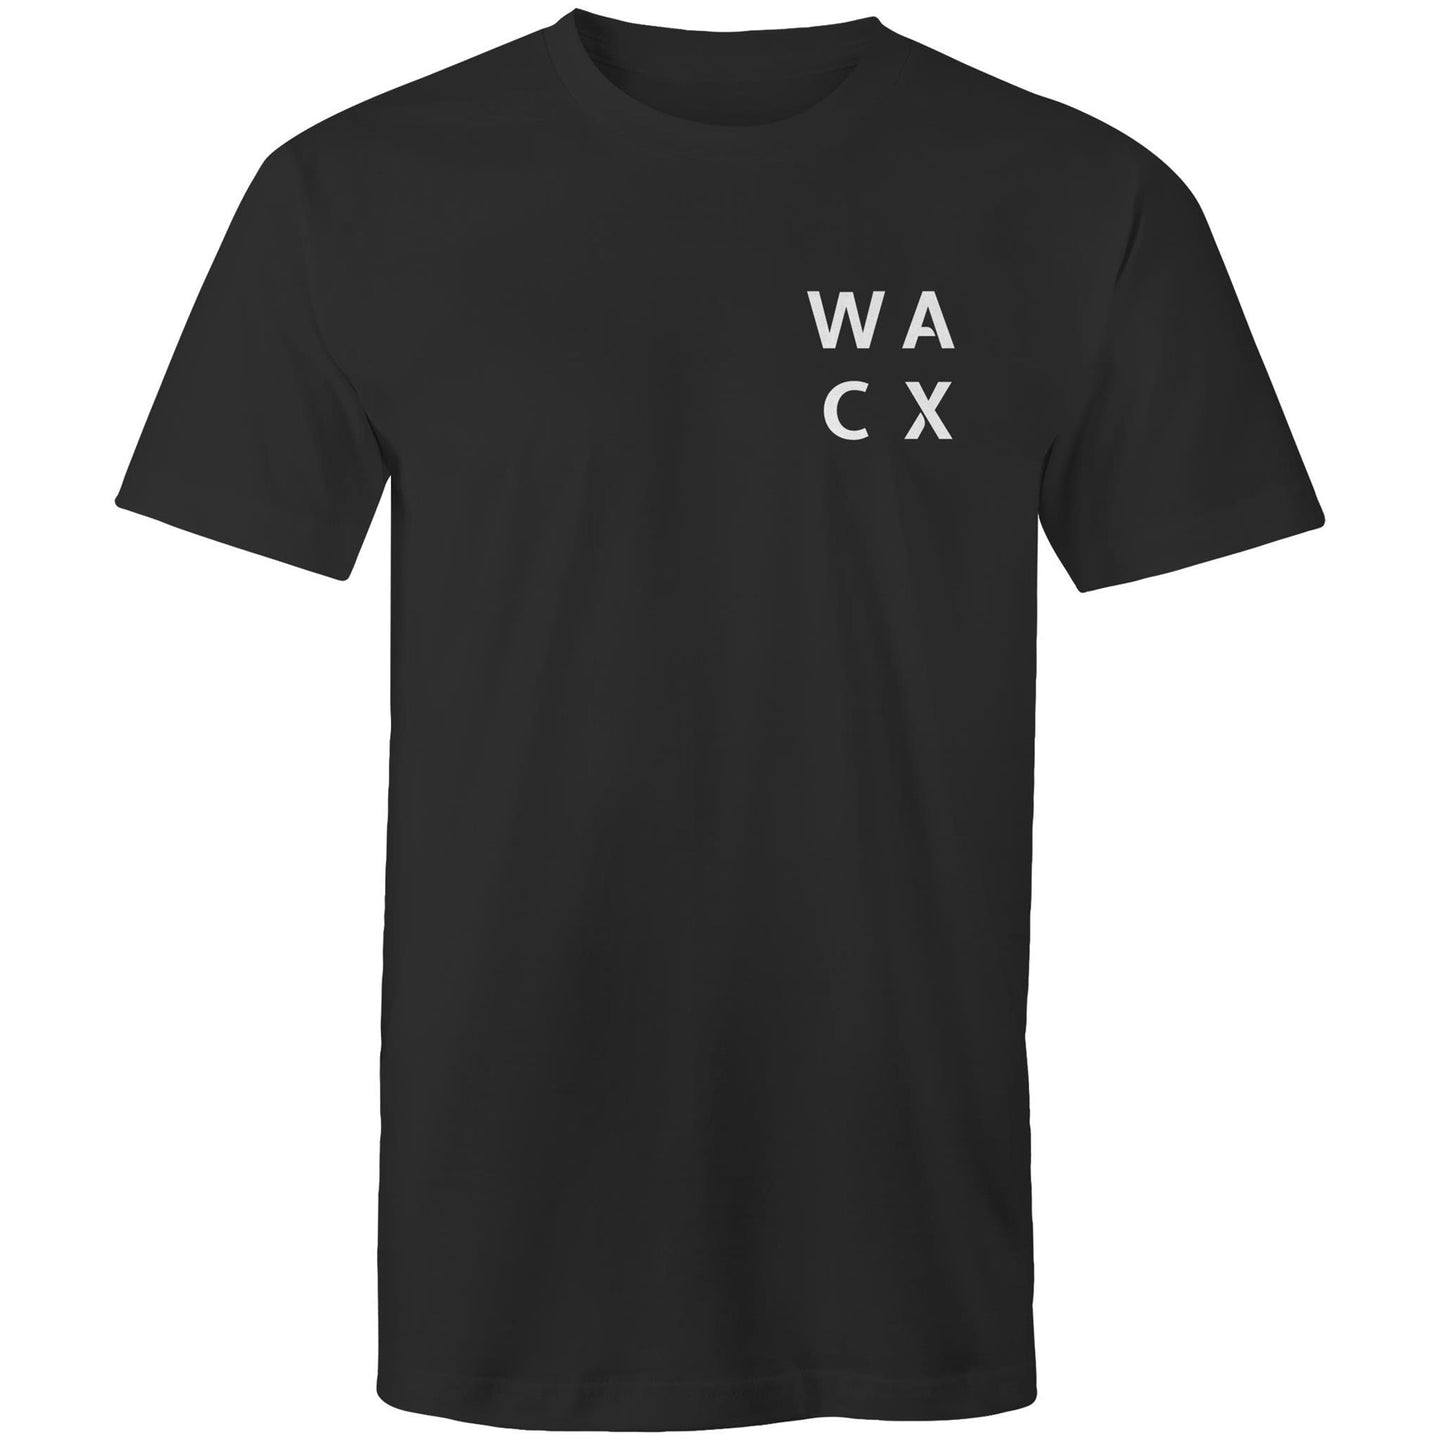 WACX Kid's T-Shirt - Black